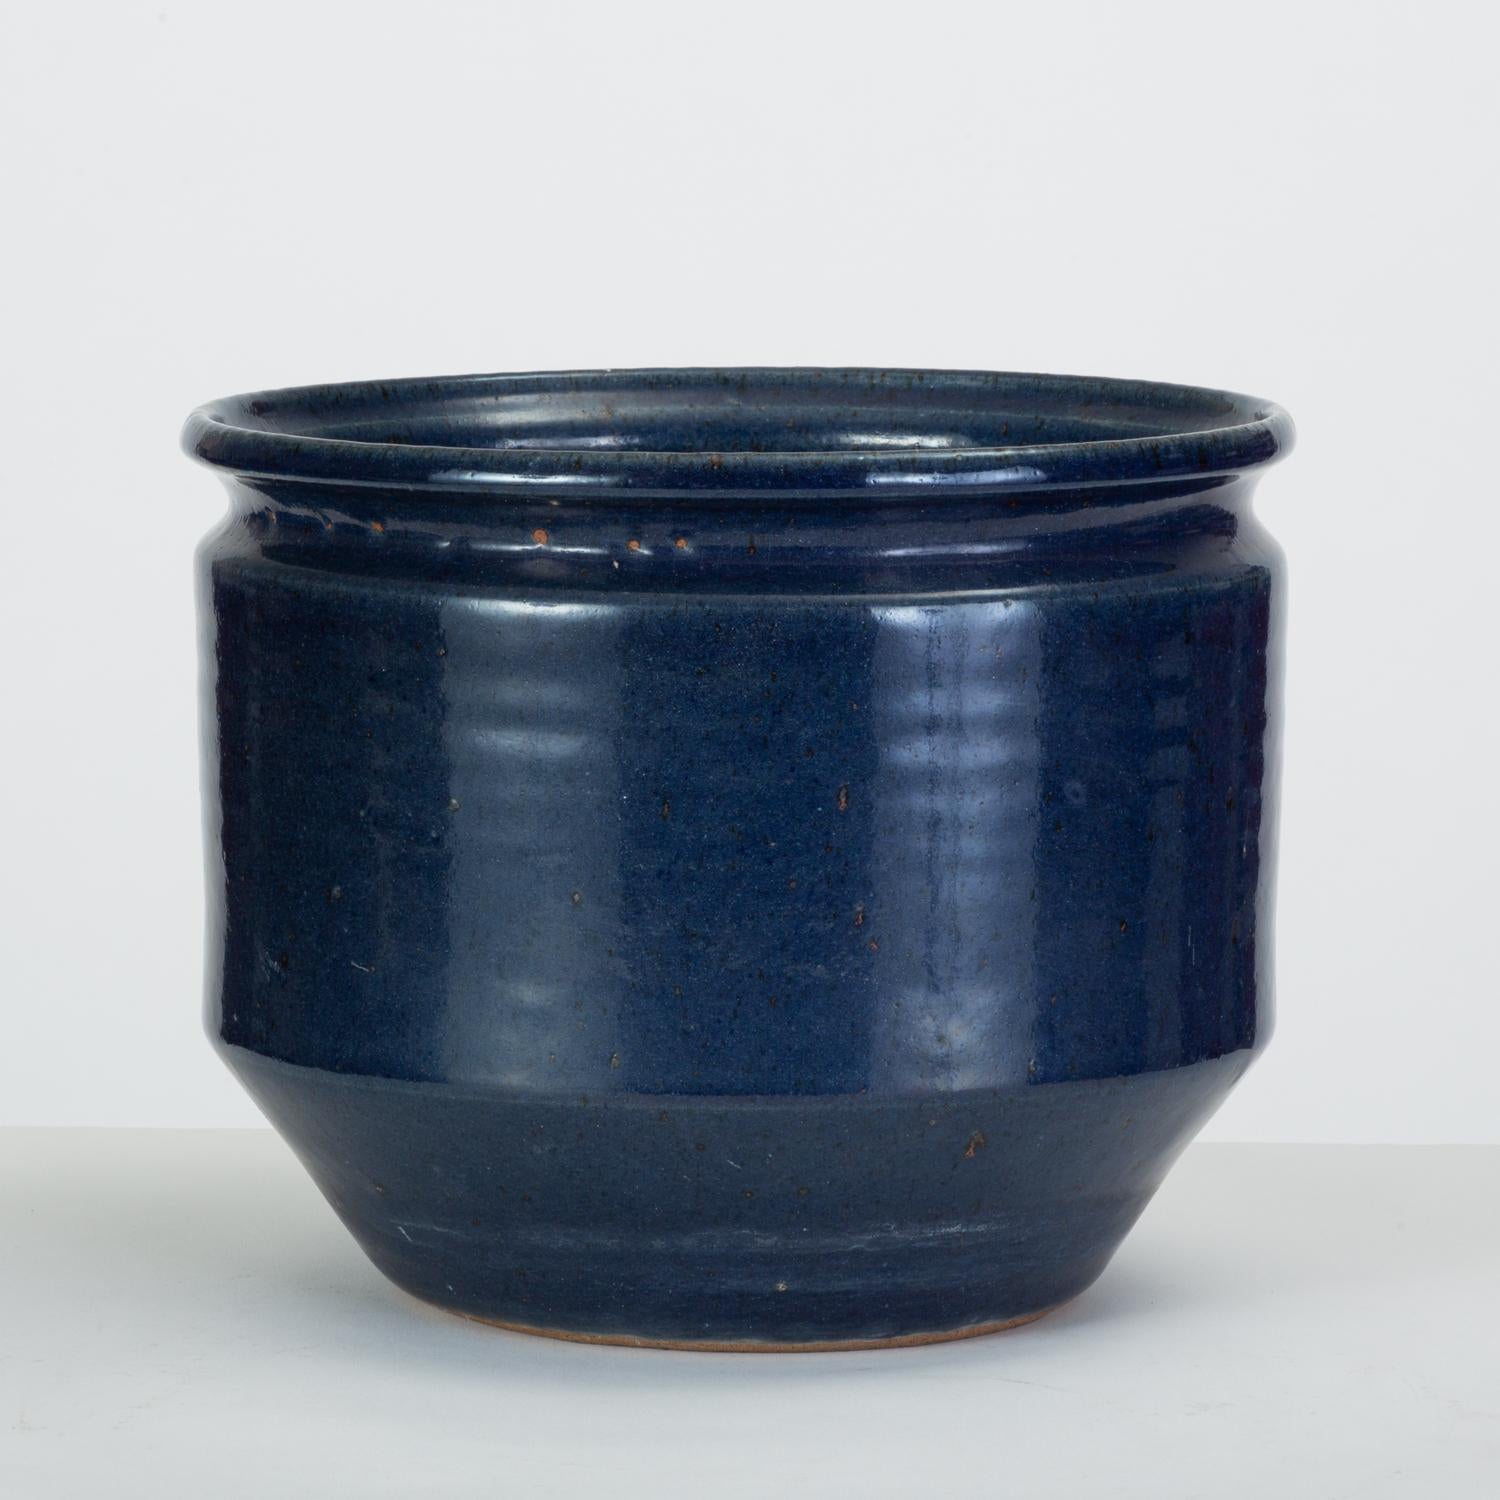 Pair of Blue-Glazed Earthgender Bowl Planters, David Cressey and Robert Maxwell (amerikanisch)